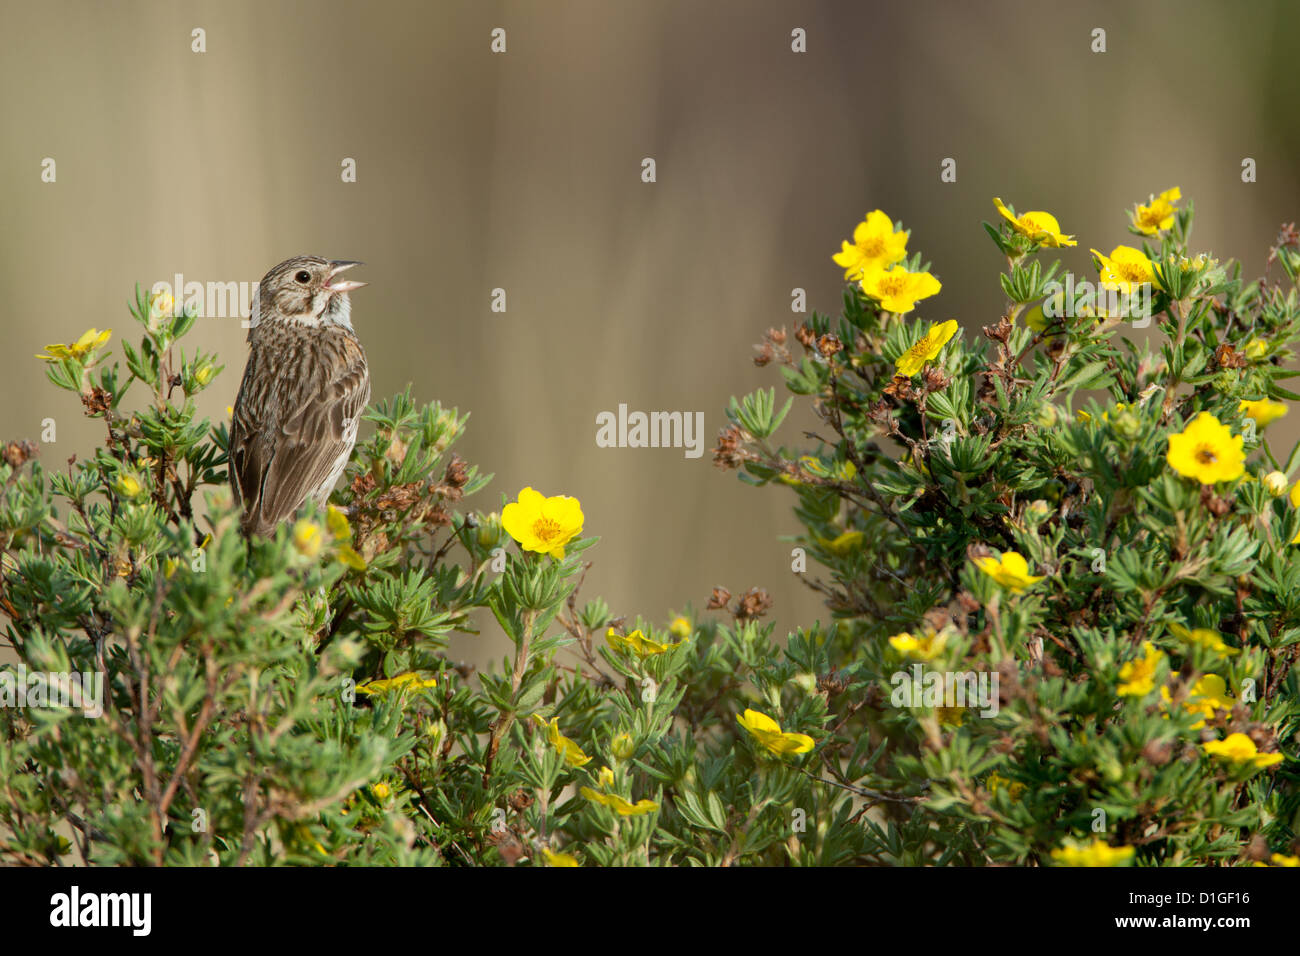 Vesper Sparrow in Sträucher Cinquefoil Blumen Blüten Sitzender Vogel Vögel singvögel Vogelkunde Wissenschaft Natur Tierwelt Umwelt Sperlinge Stockfoto